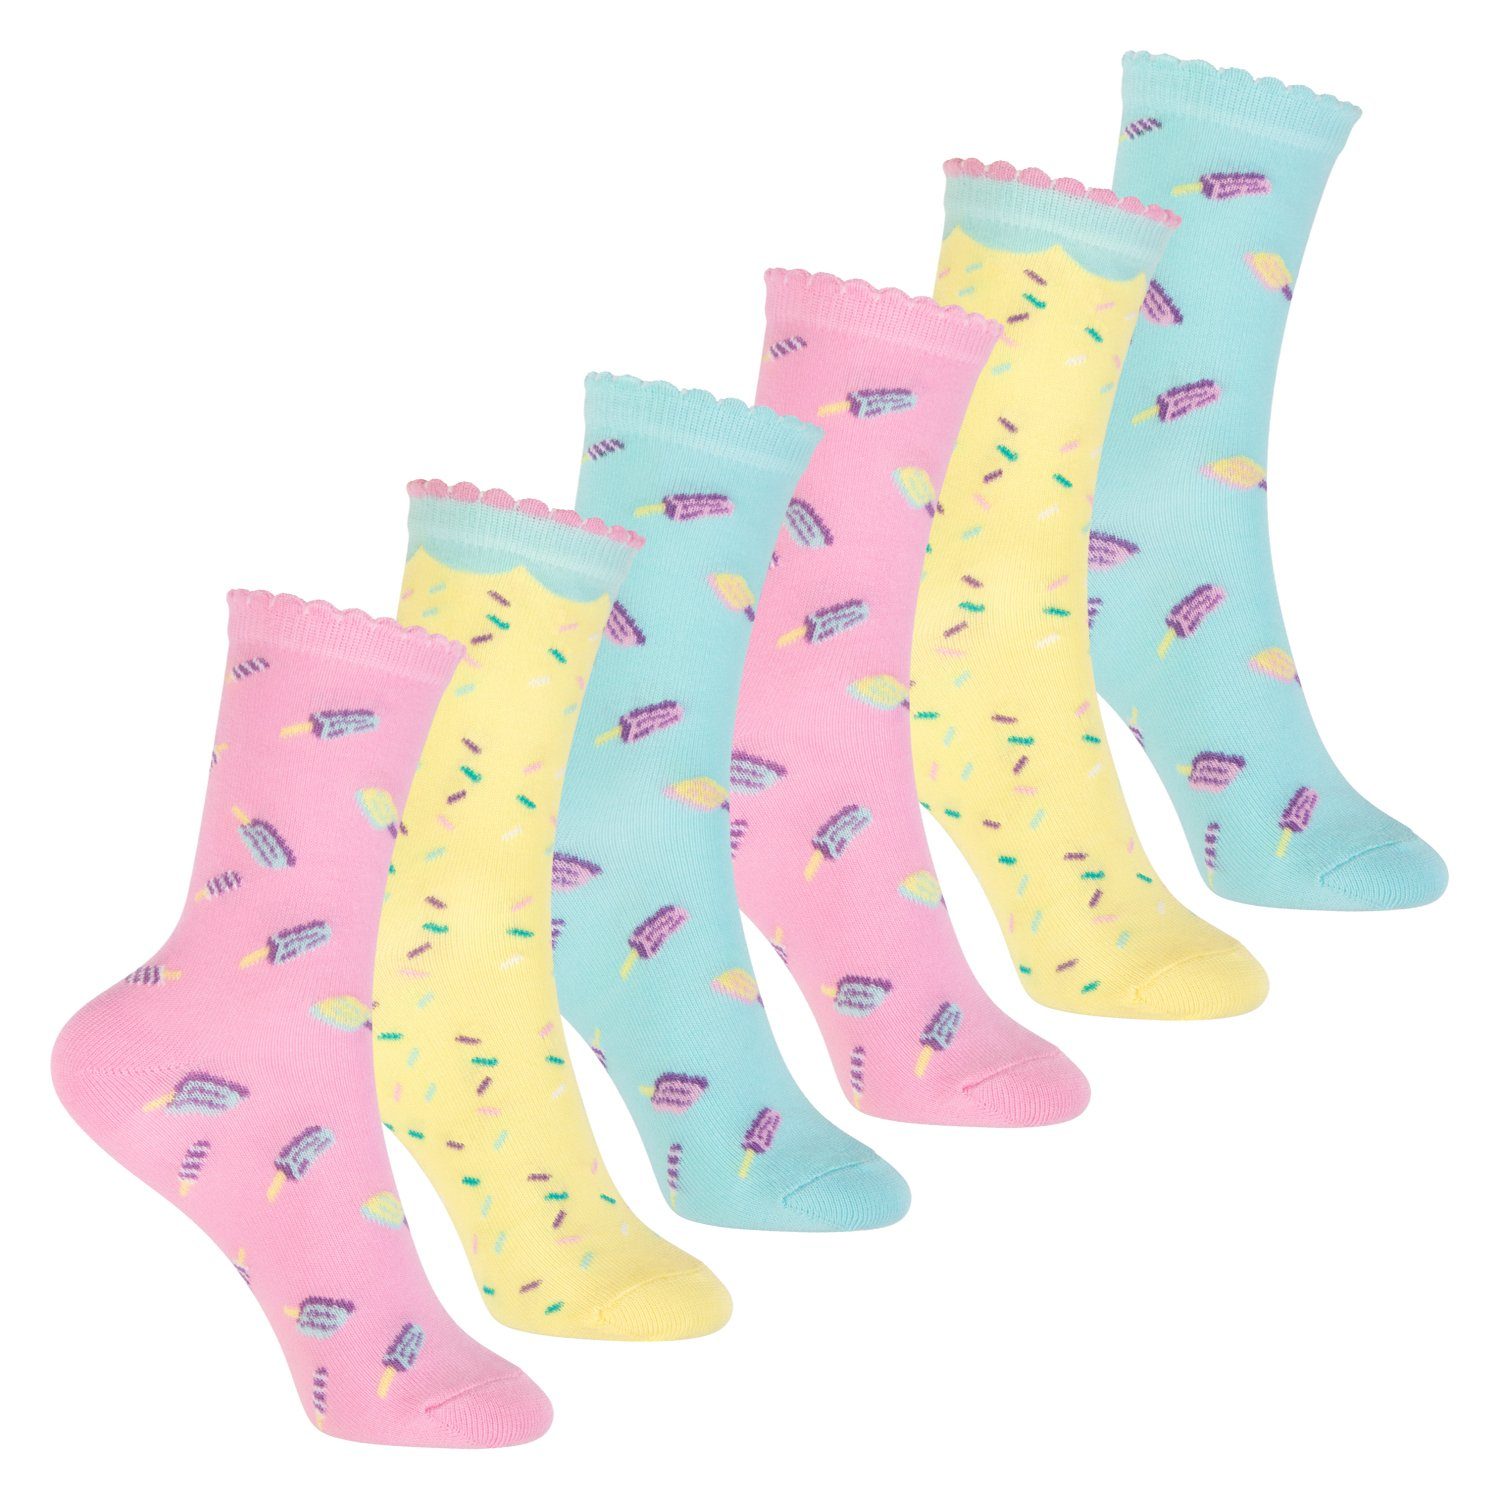 Footstar Basicsocken Bunte Baumwoll Socken für Kinder (6er Pack) Pastell